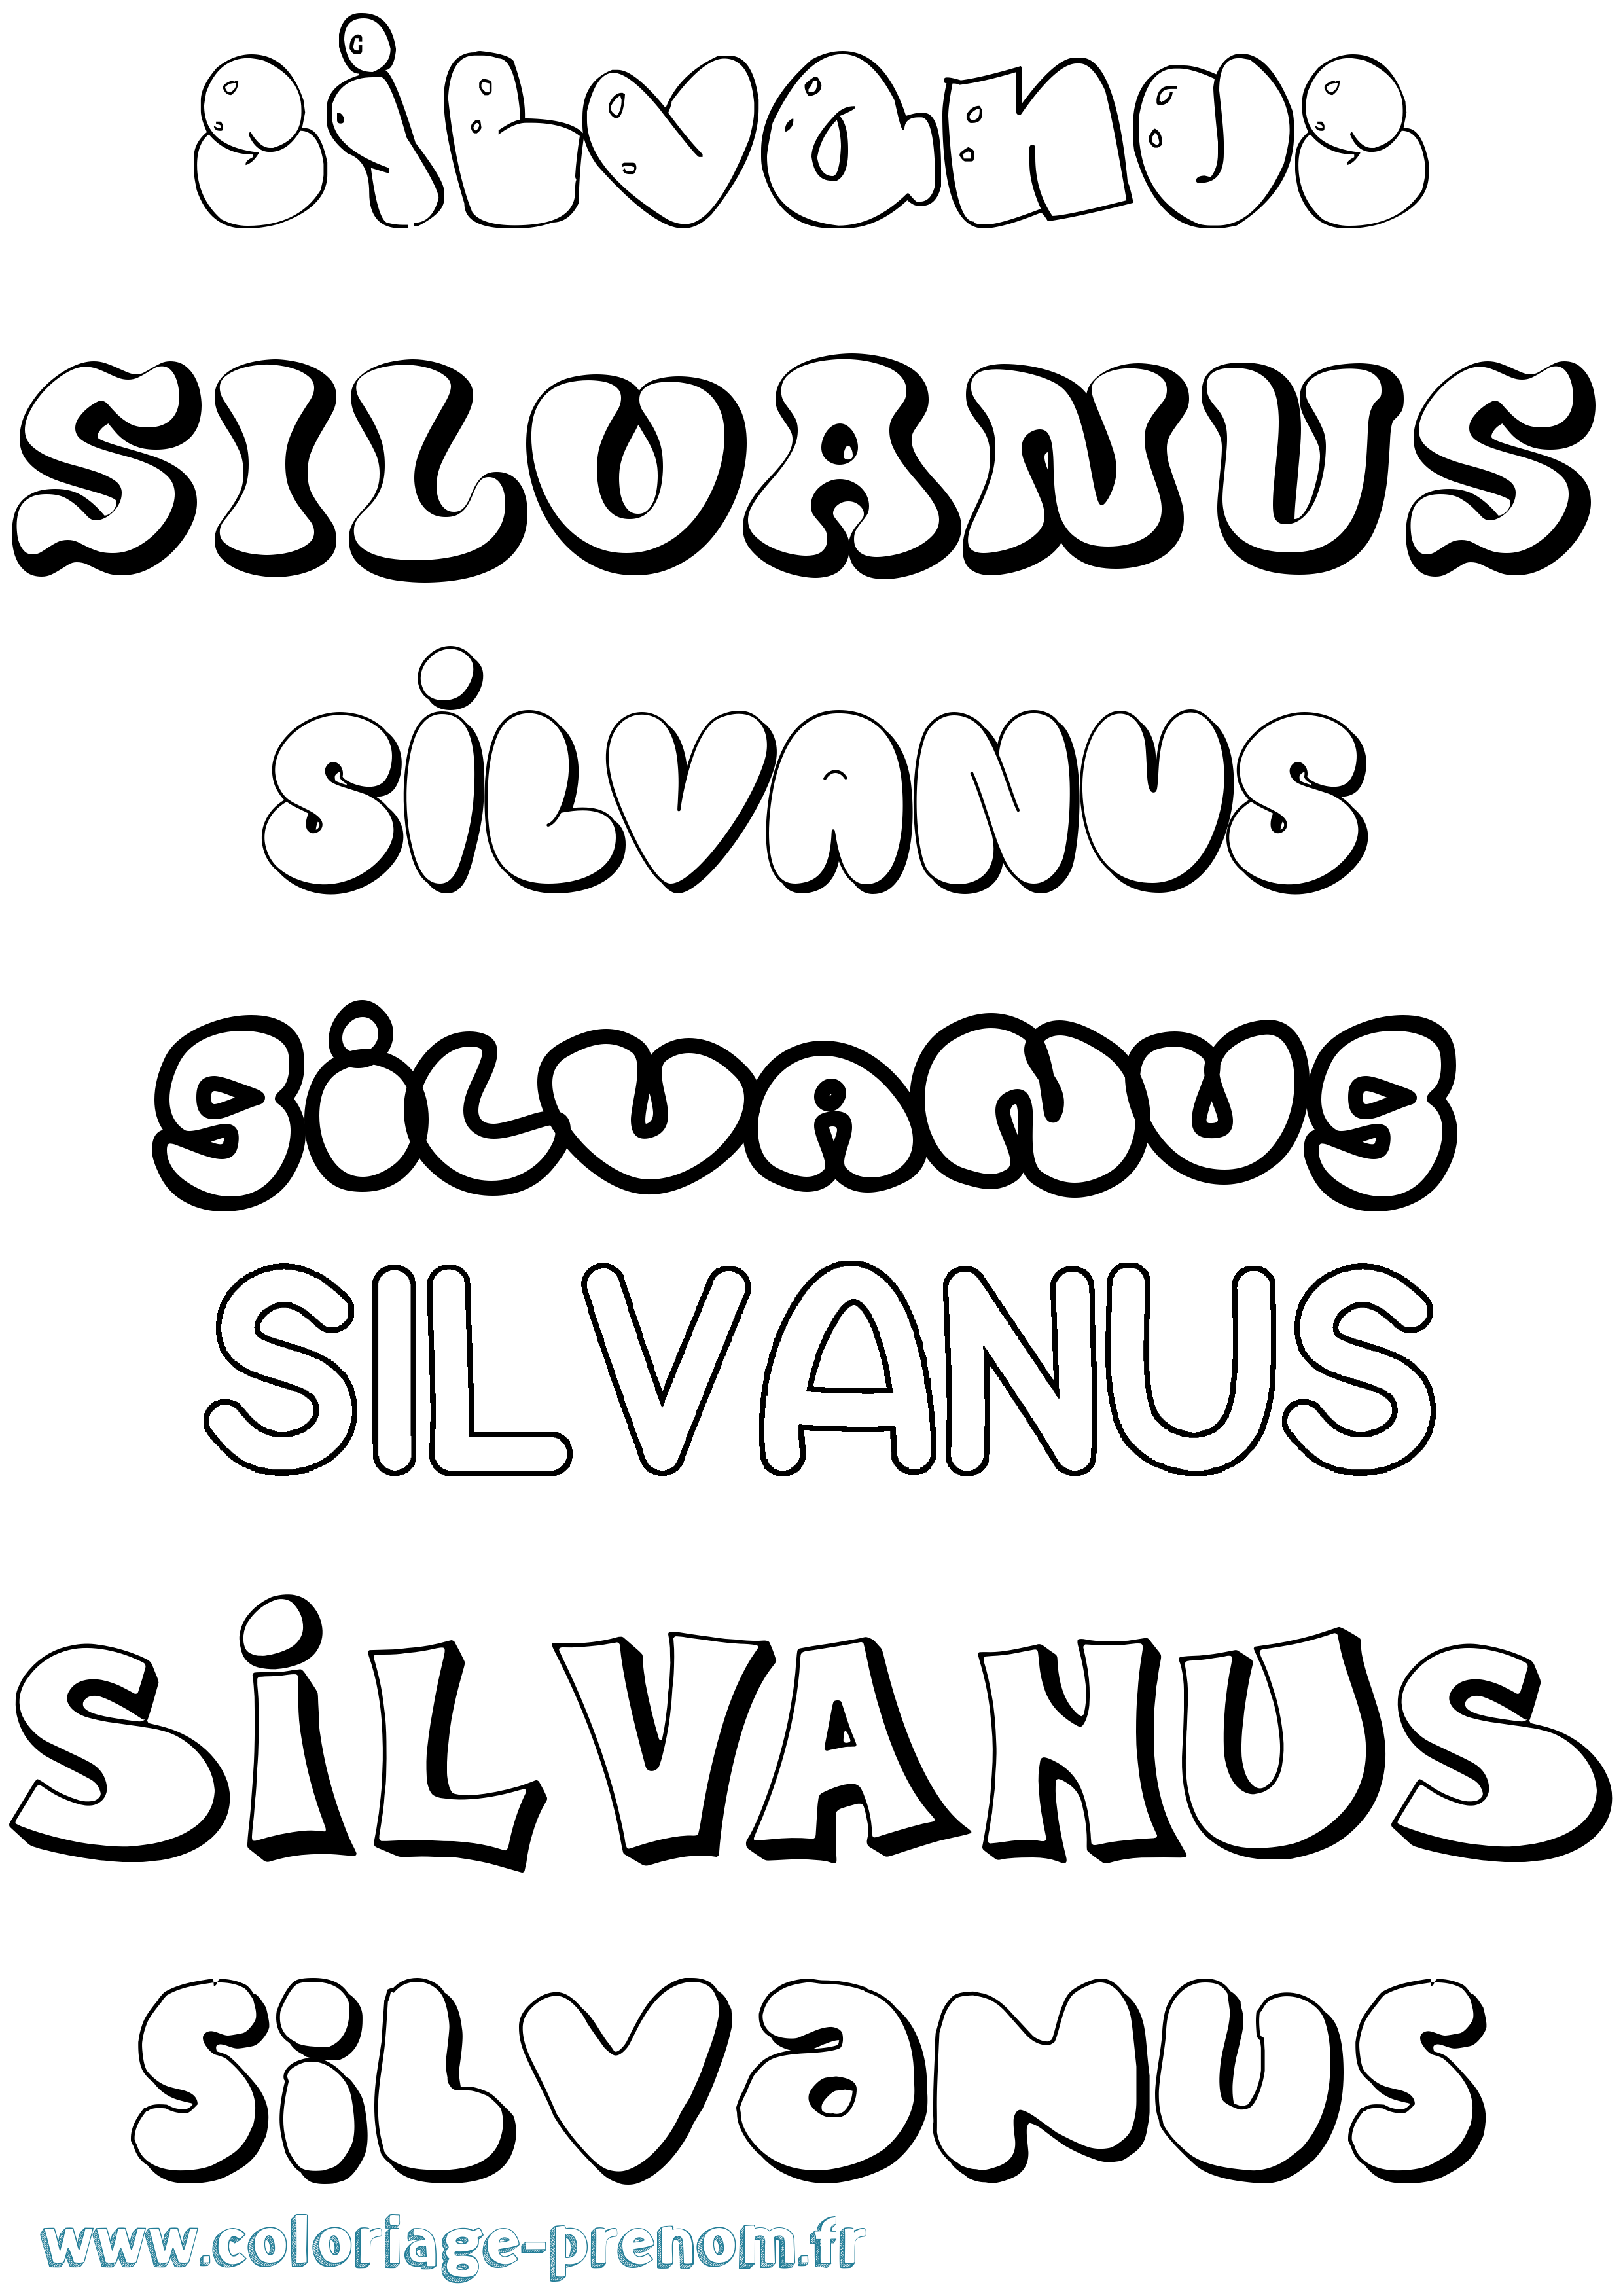 Coloriage prénom Silvanus Bubble